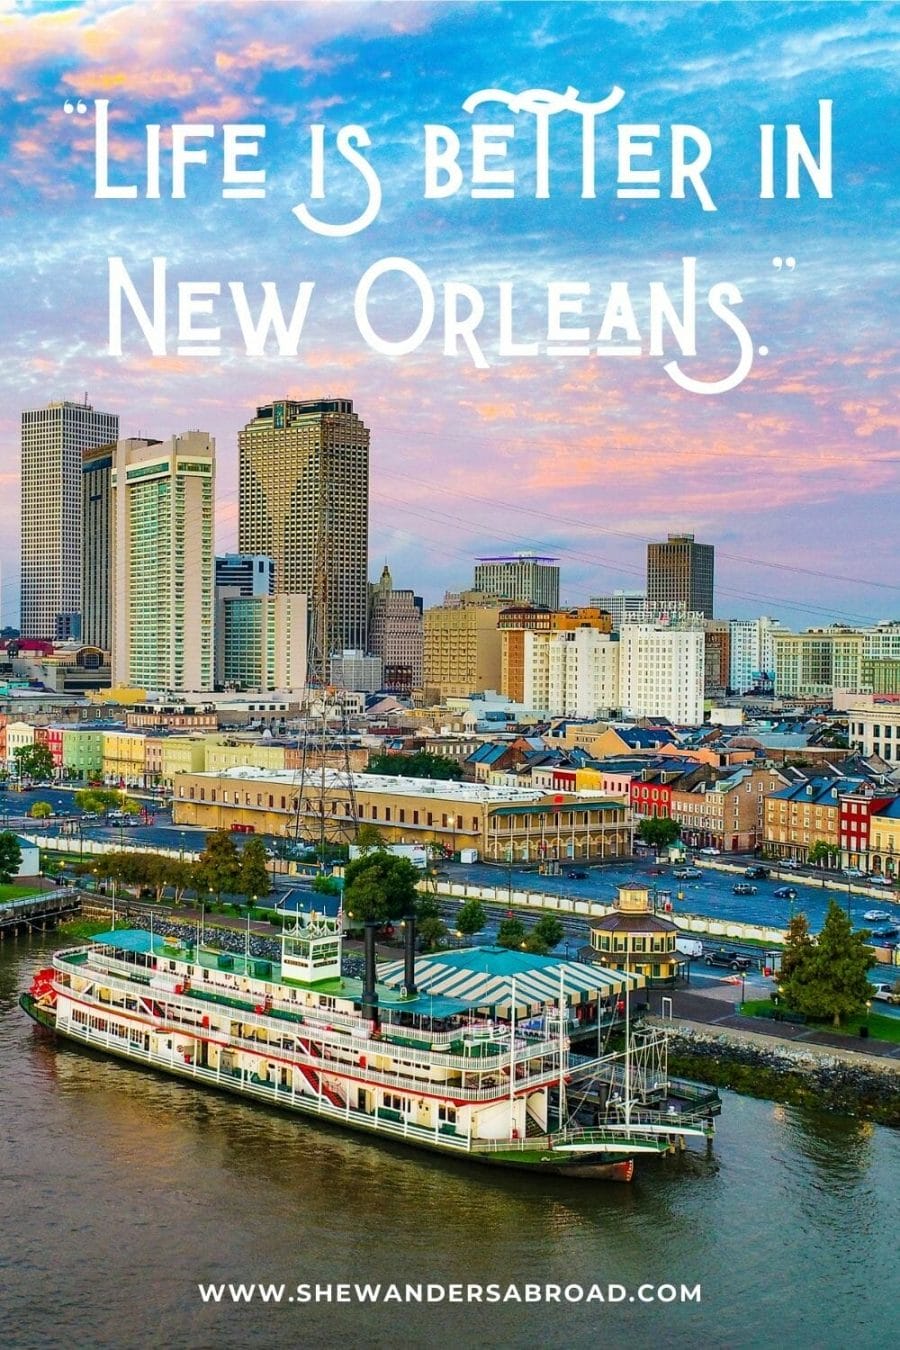 Short New Orleans Instagram Captions